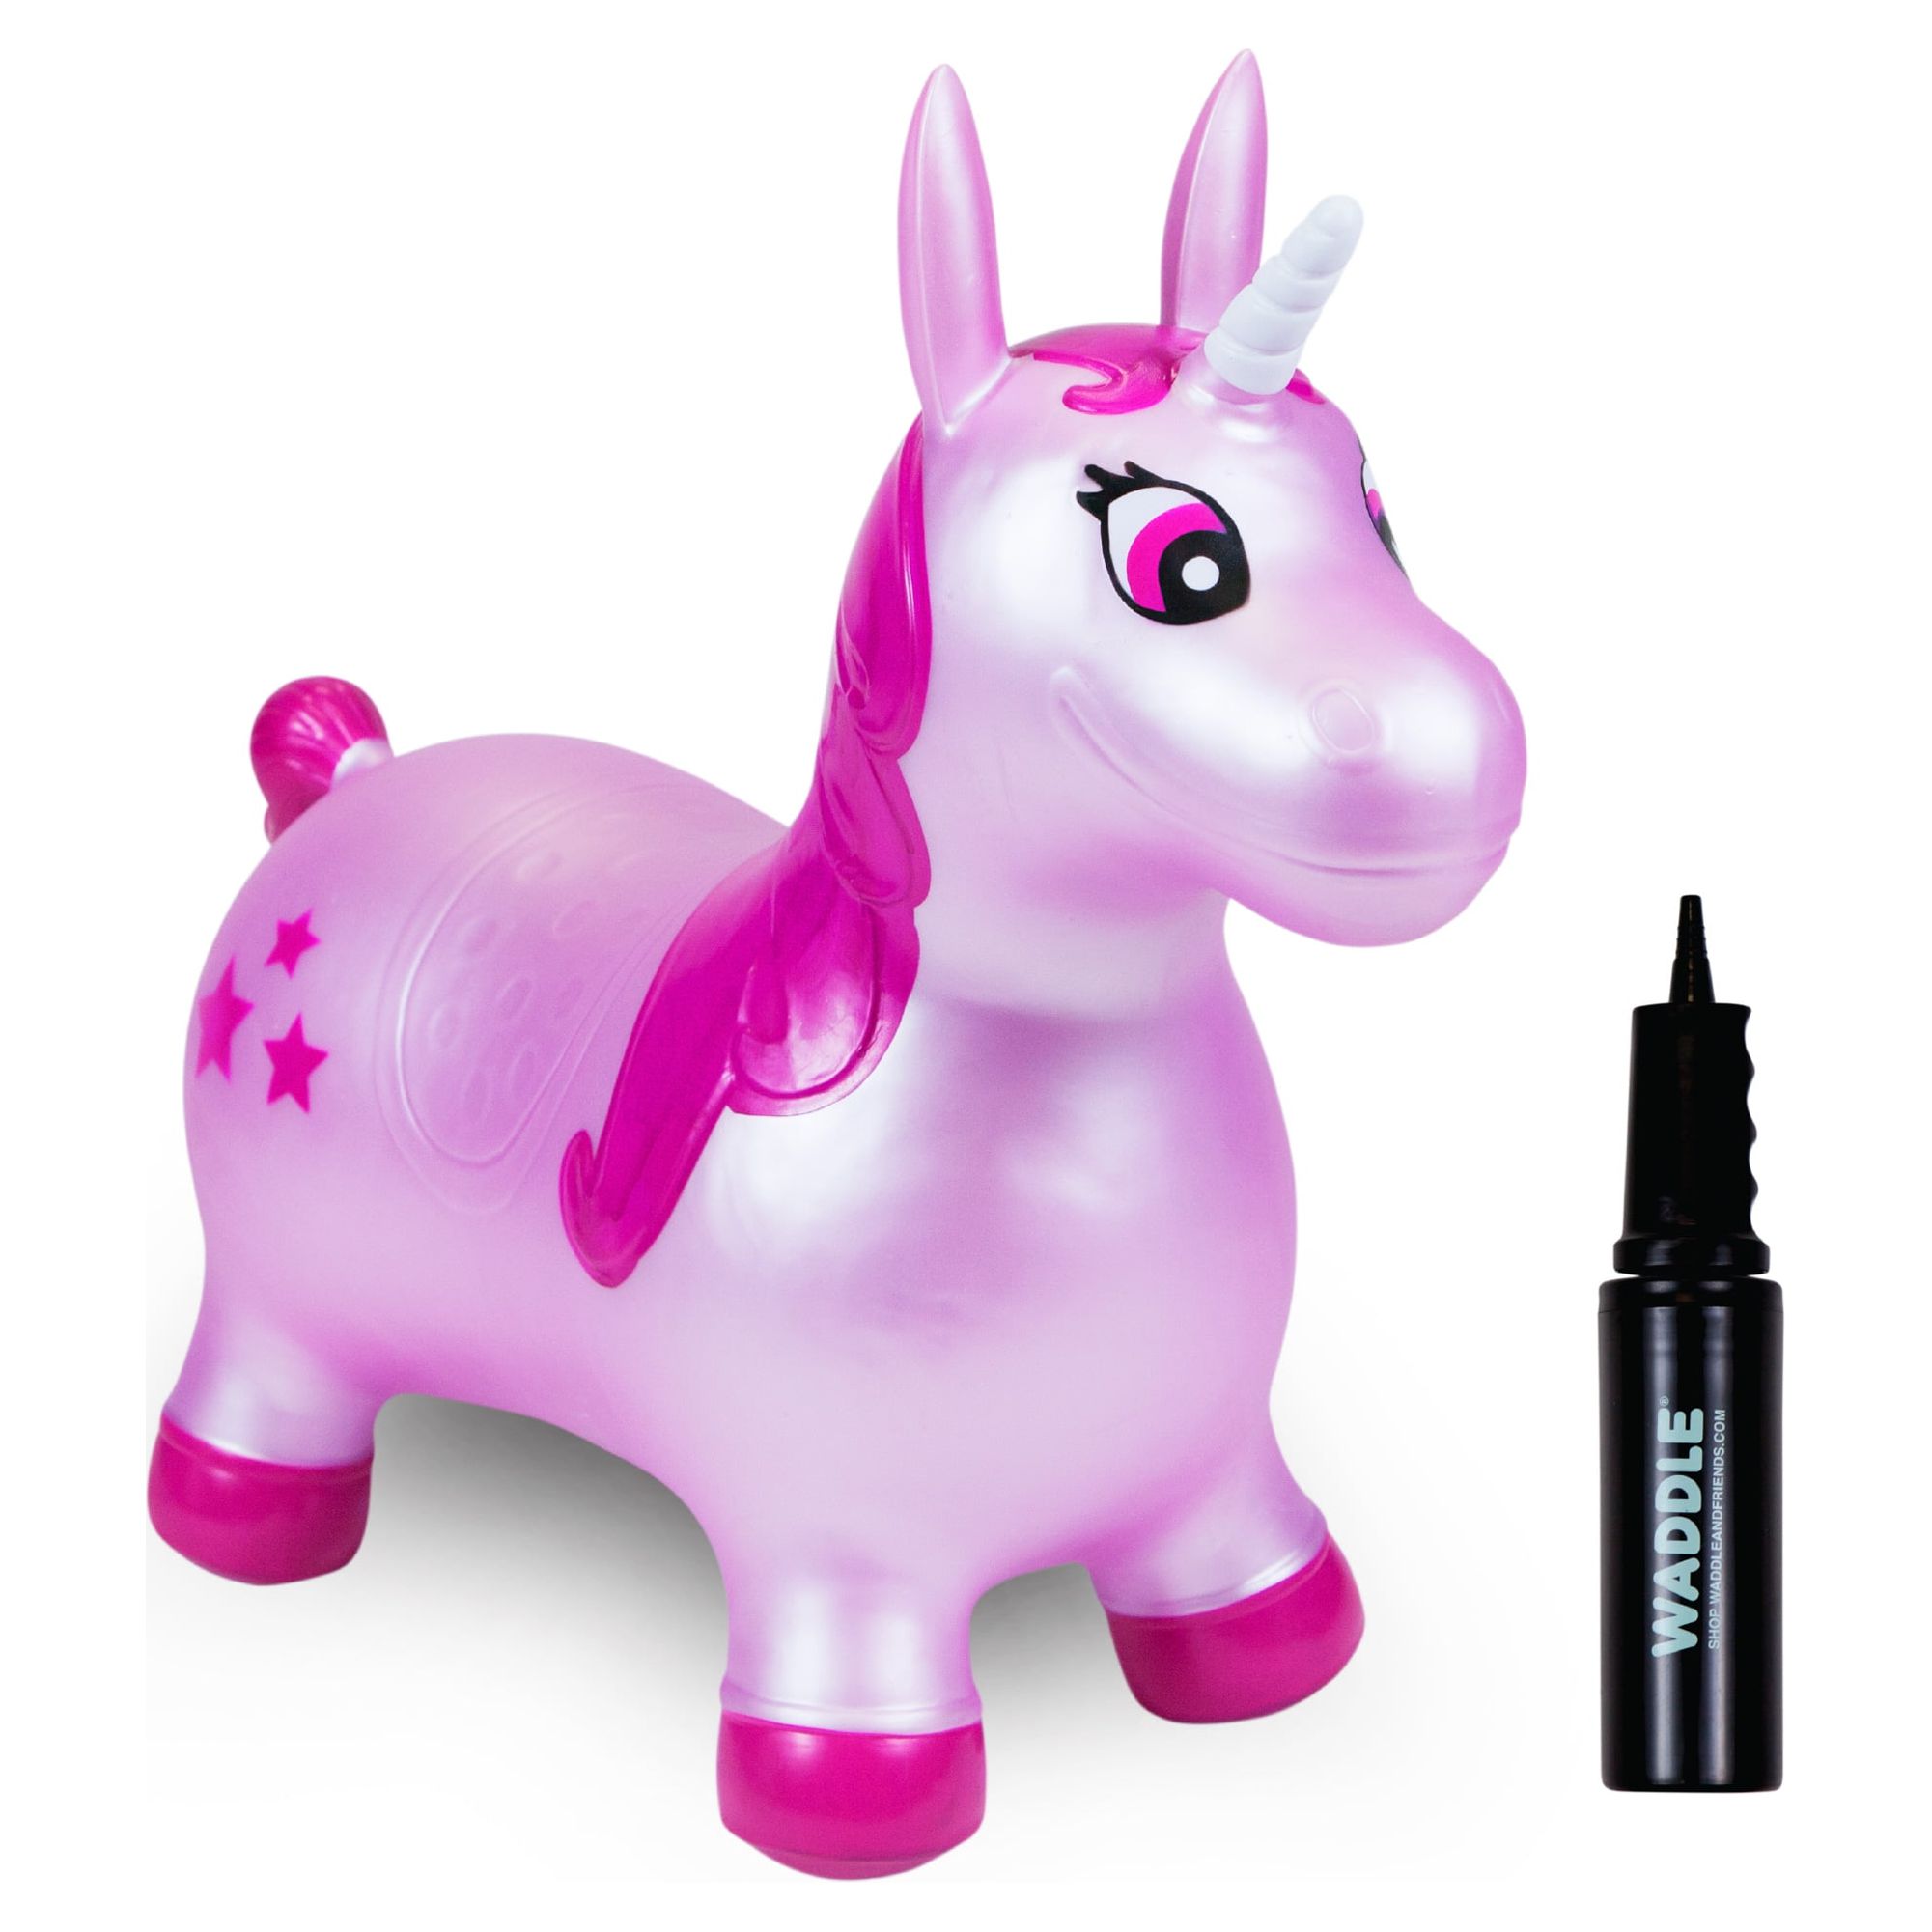 Waddle Pink Unicorn Inflatable Bouncer Ride on - image 3 of 7